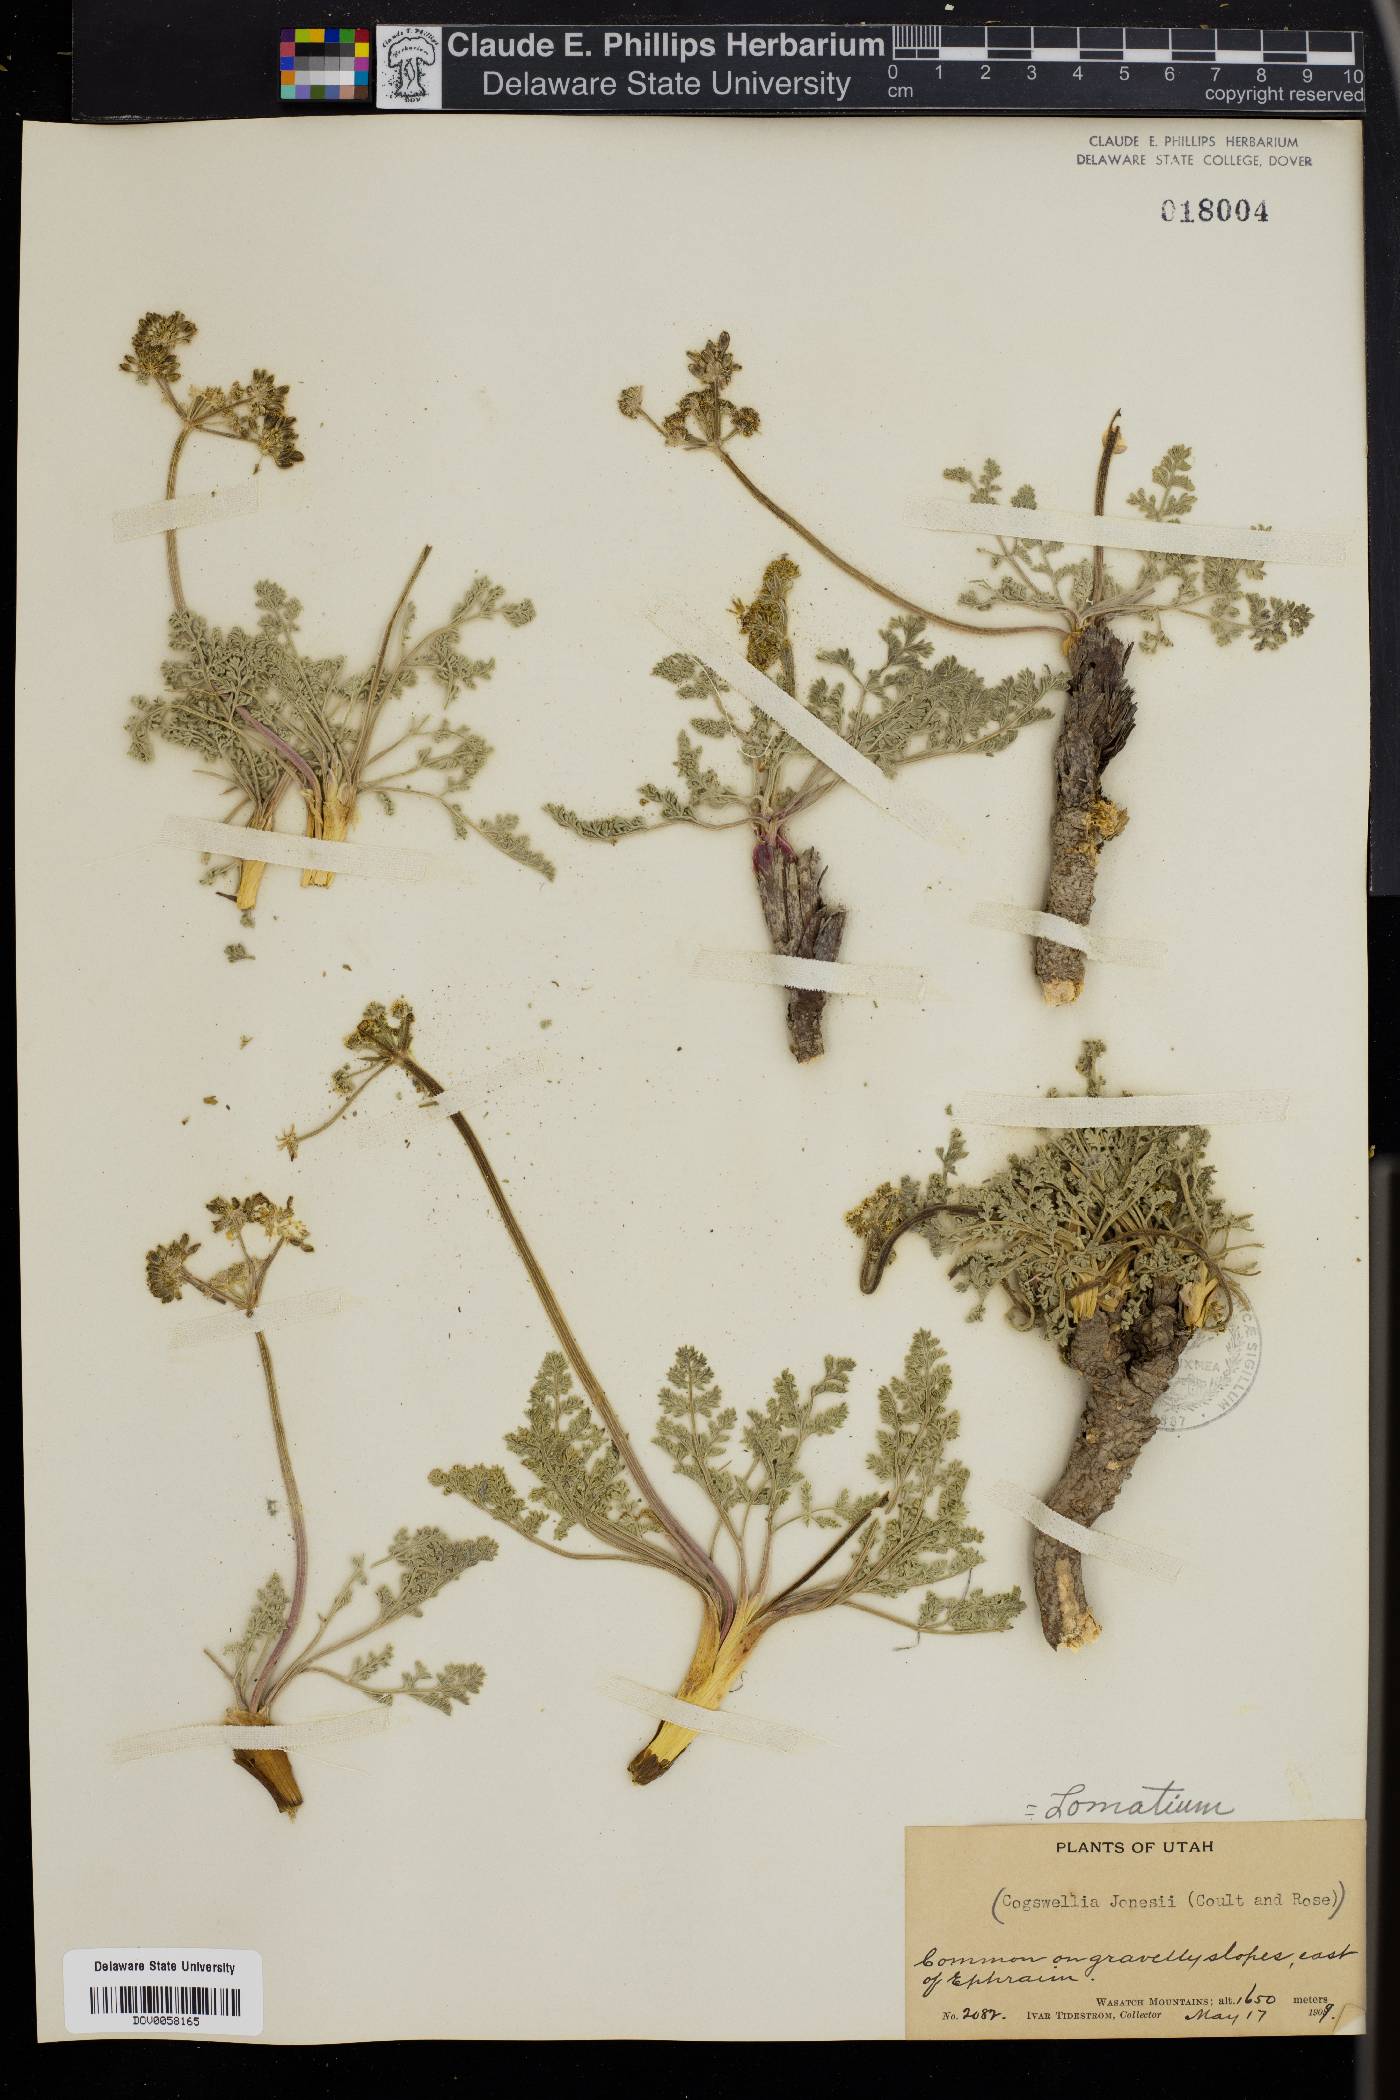 Lomatium geyeri image